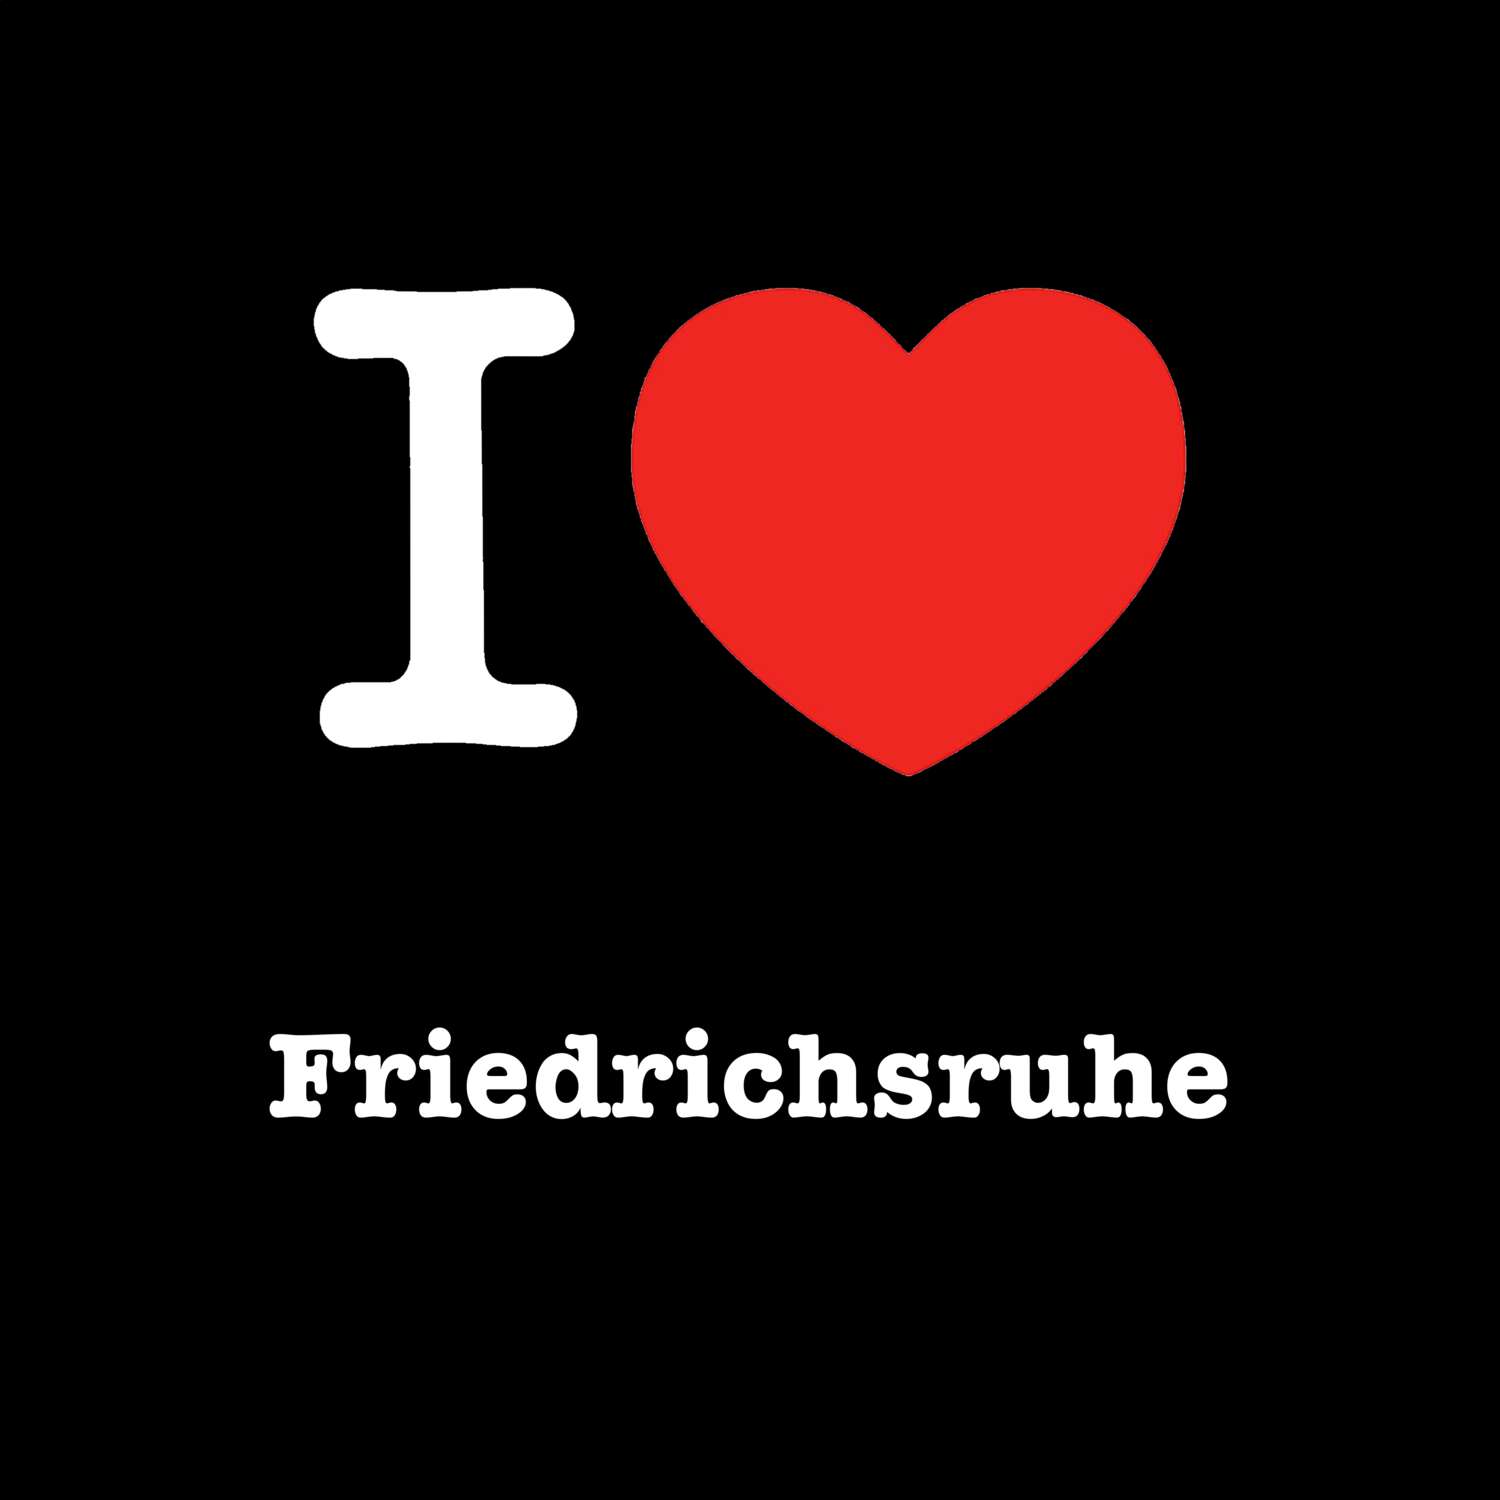 Friedrichsruhe T-Shirt »I love«